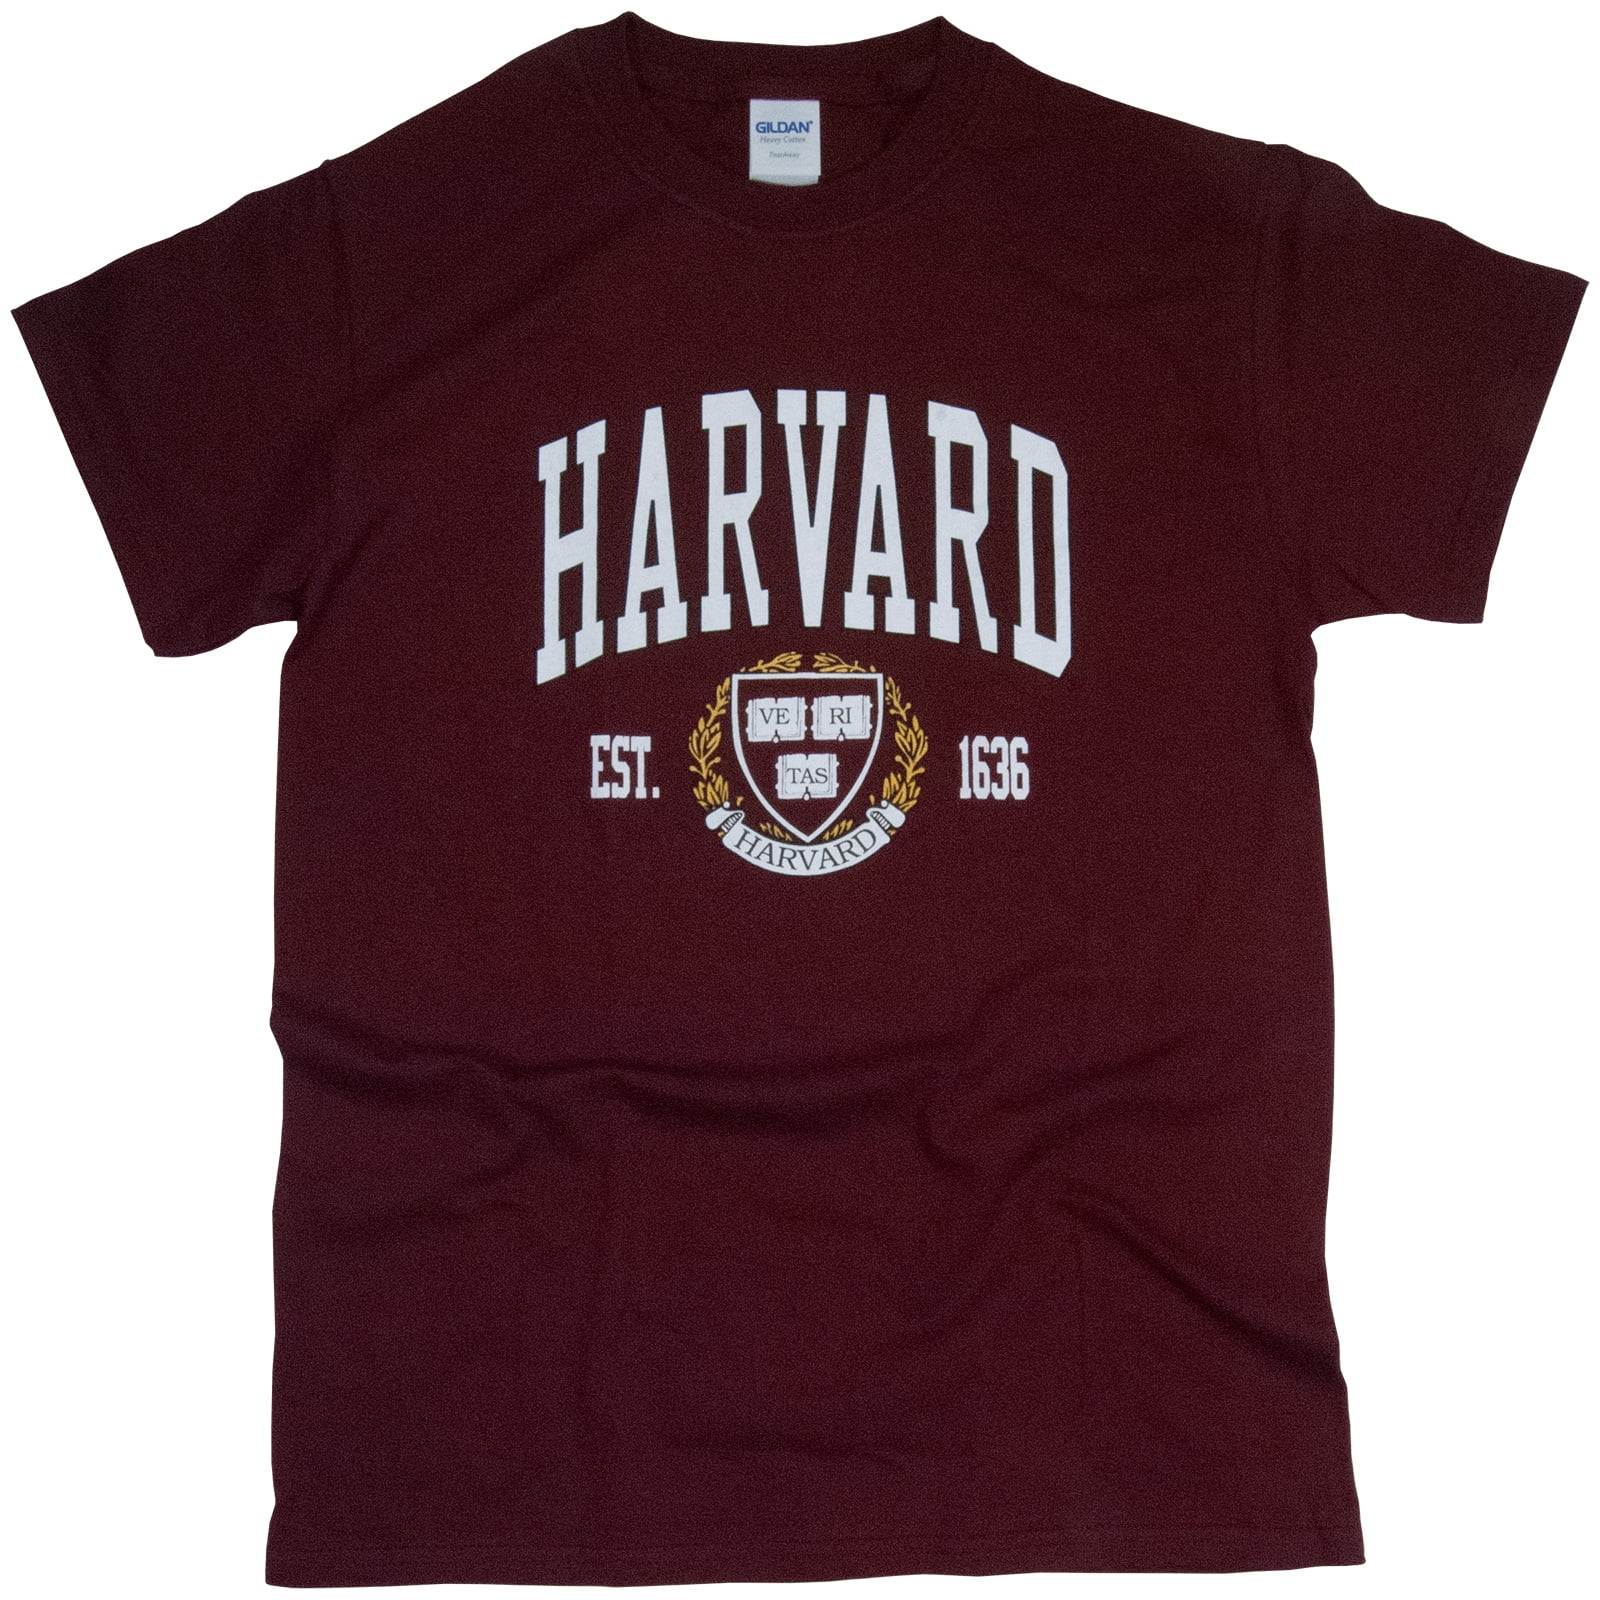 Harvard University T-Shirt Officially Licensed Logo Tee Walmart.com